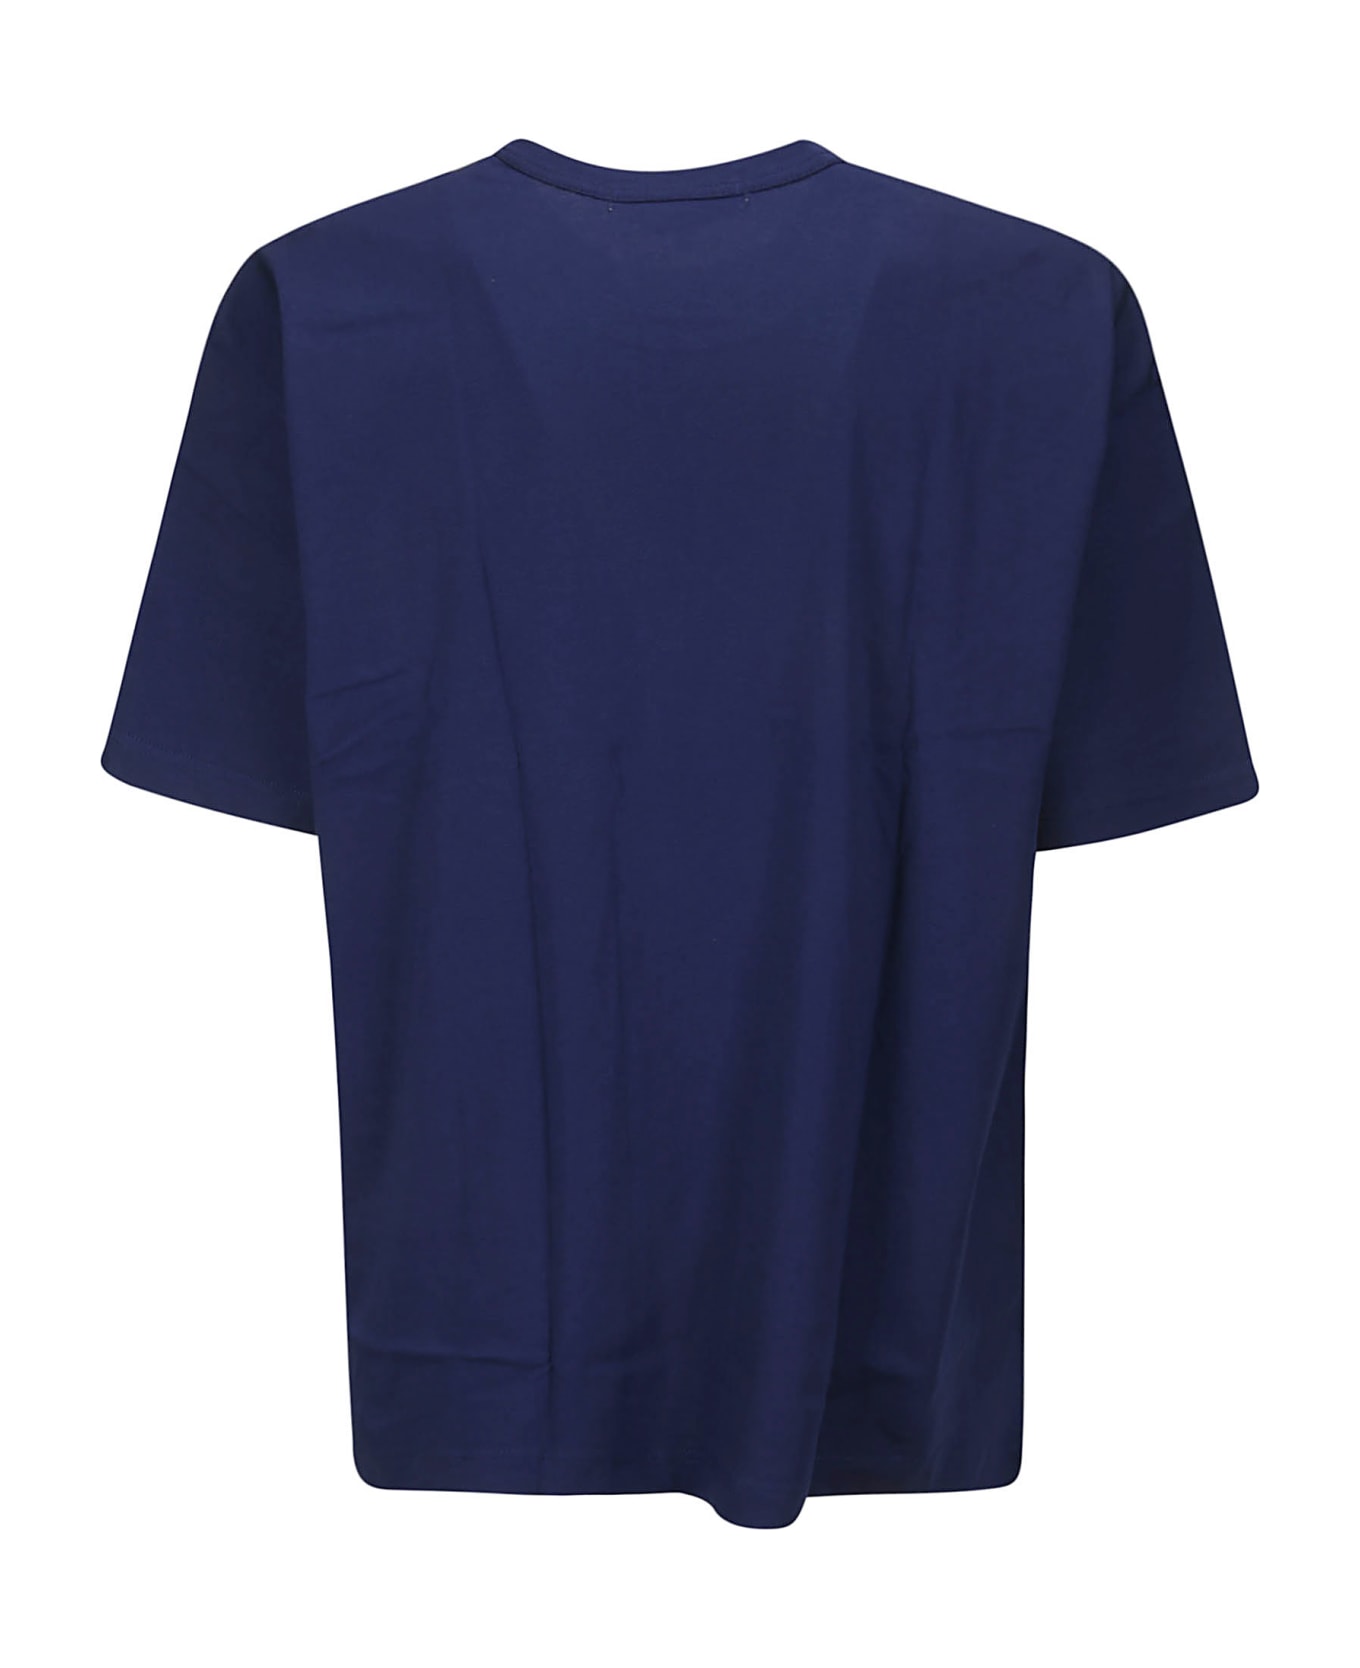 Comme des Garçons Shirt Cotton Jersey Plain With Printed Cdg Shirt L - NAVY シャツ